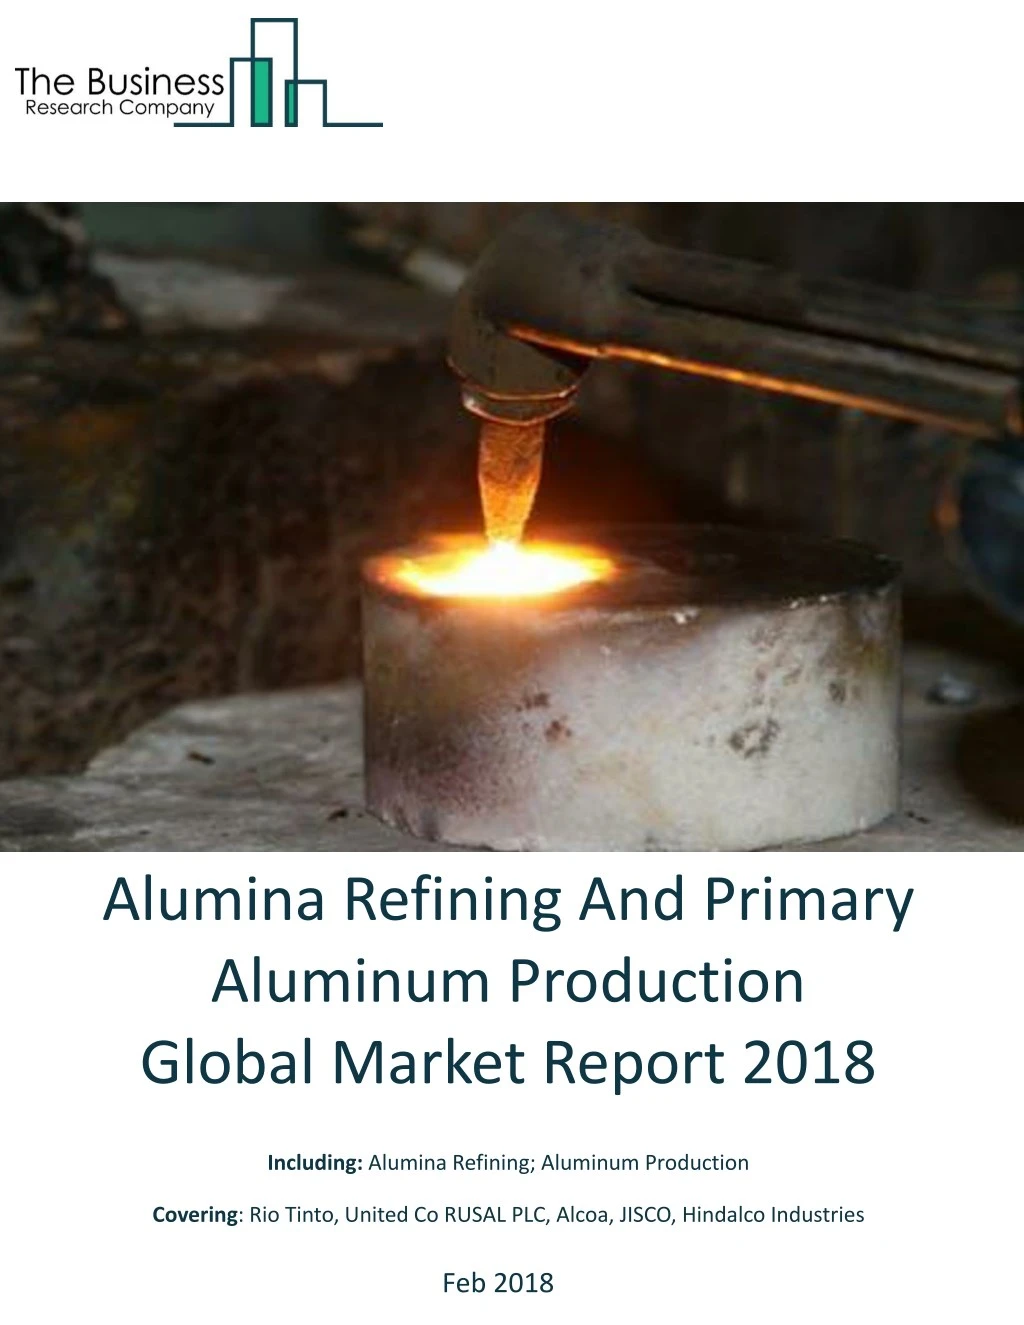 alumina refining and primary aluminum production